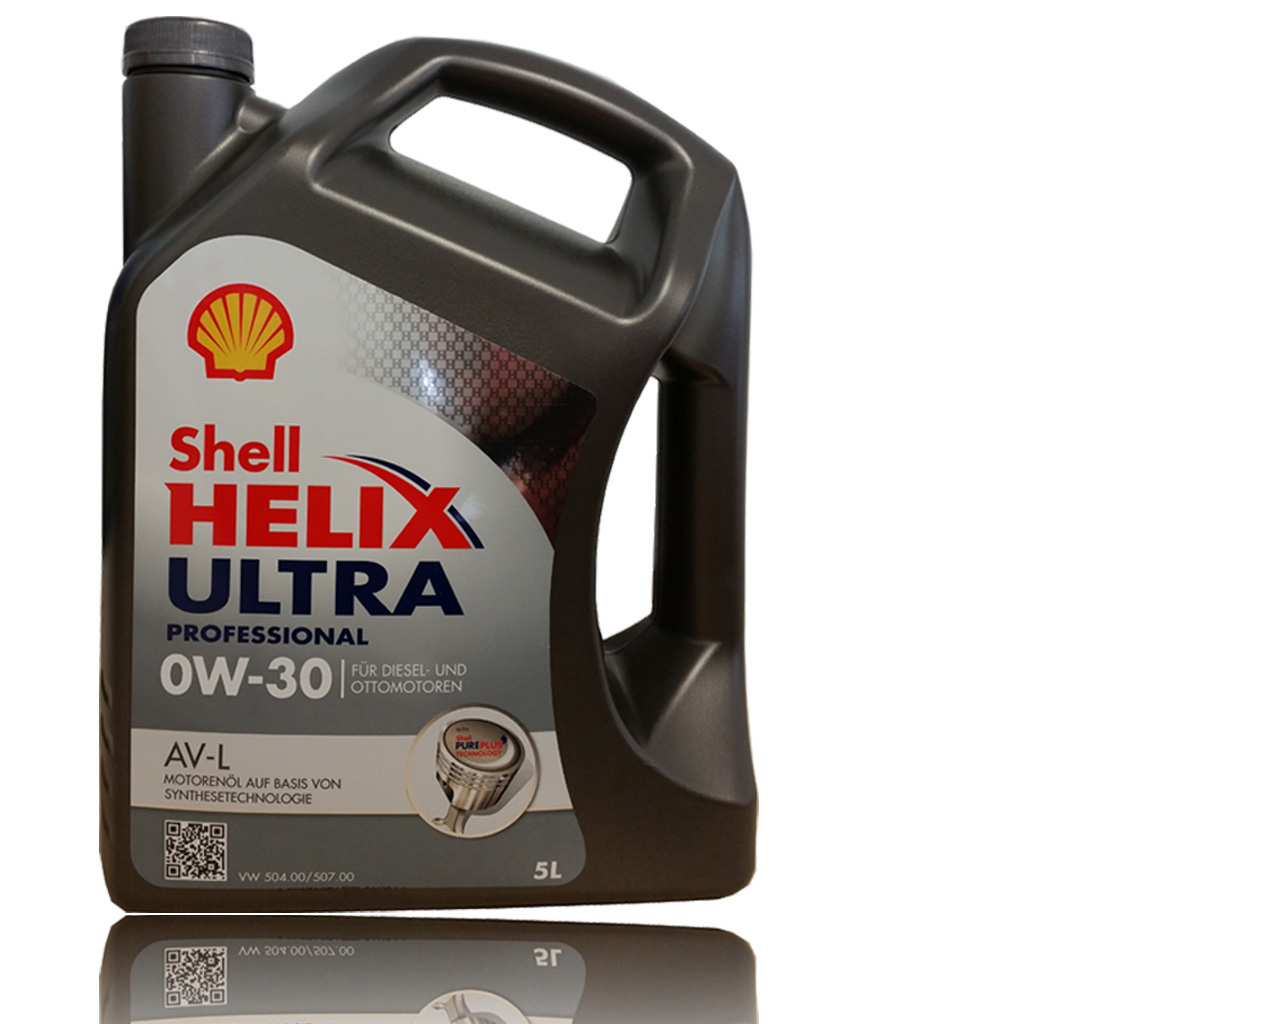 Моторные масла с допуском 504 507. Helix Ultra professional av-l 0w-30. Shell Helix Ultra 0w-30 504/507. Shell Helix Ultra av 0w-30. VW 504.00/507.00 Shell.